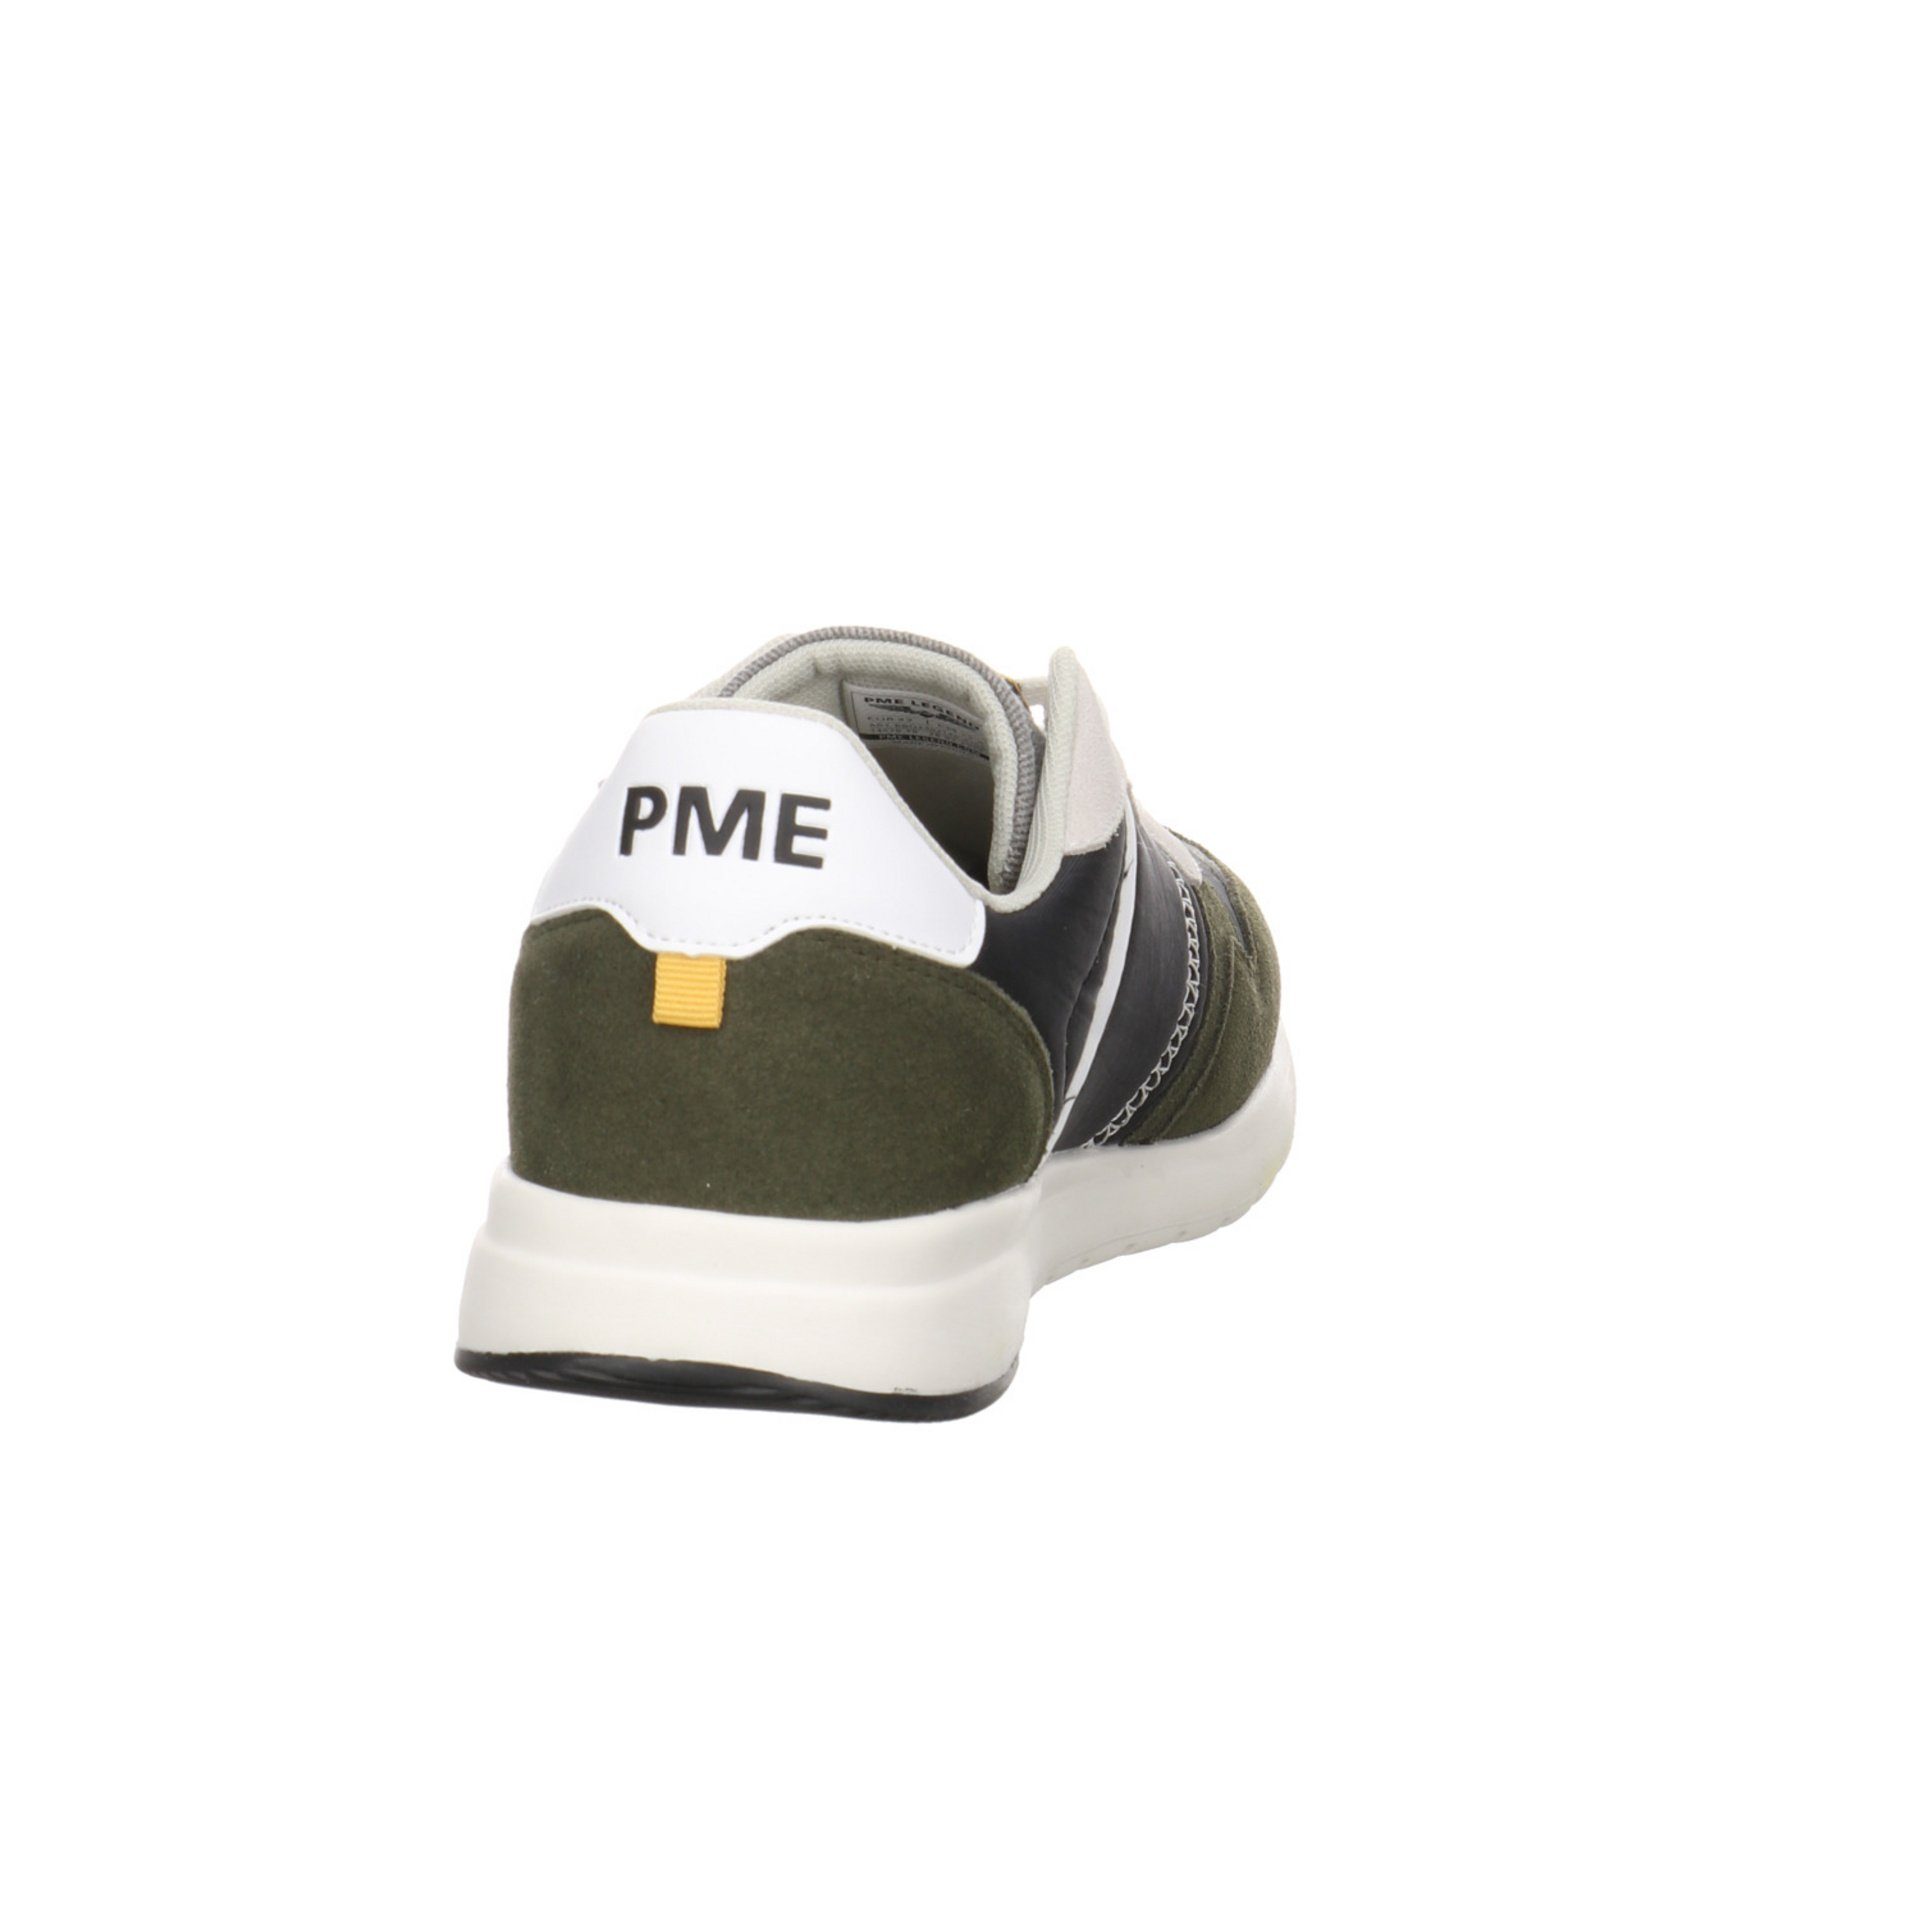 PME LEGEND Herren Sneaker Schuhe Sneaker Sneaker Korsky Leder-/Textilkombination kombi-sc grün+petrol